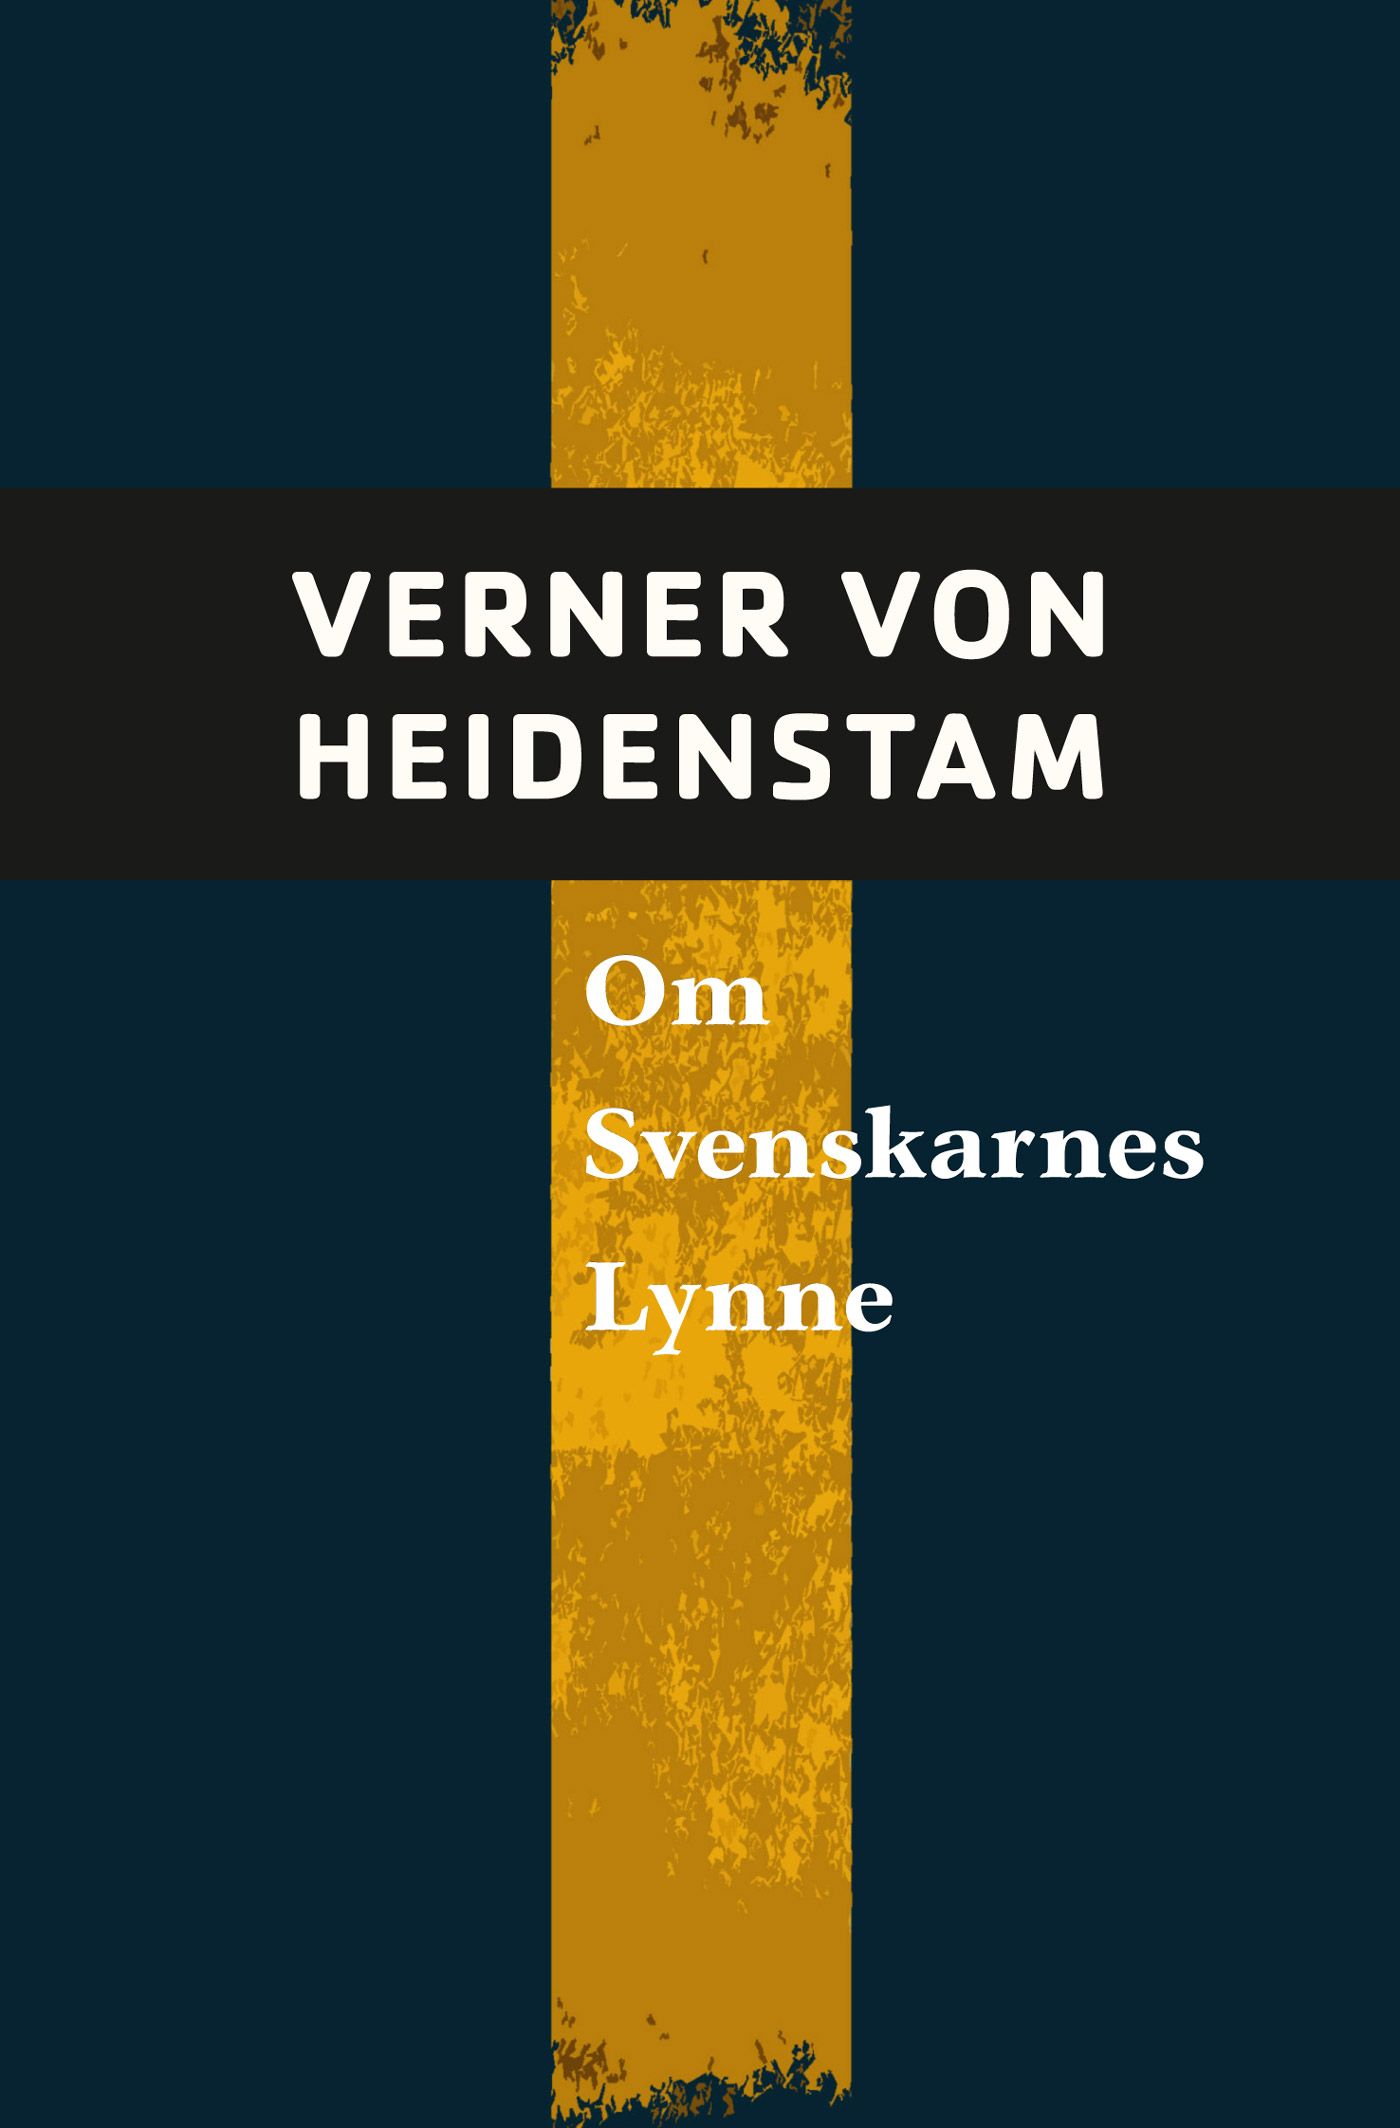 Om svenskarnas lynne, eBook by Verner von Heidenstam